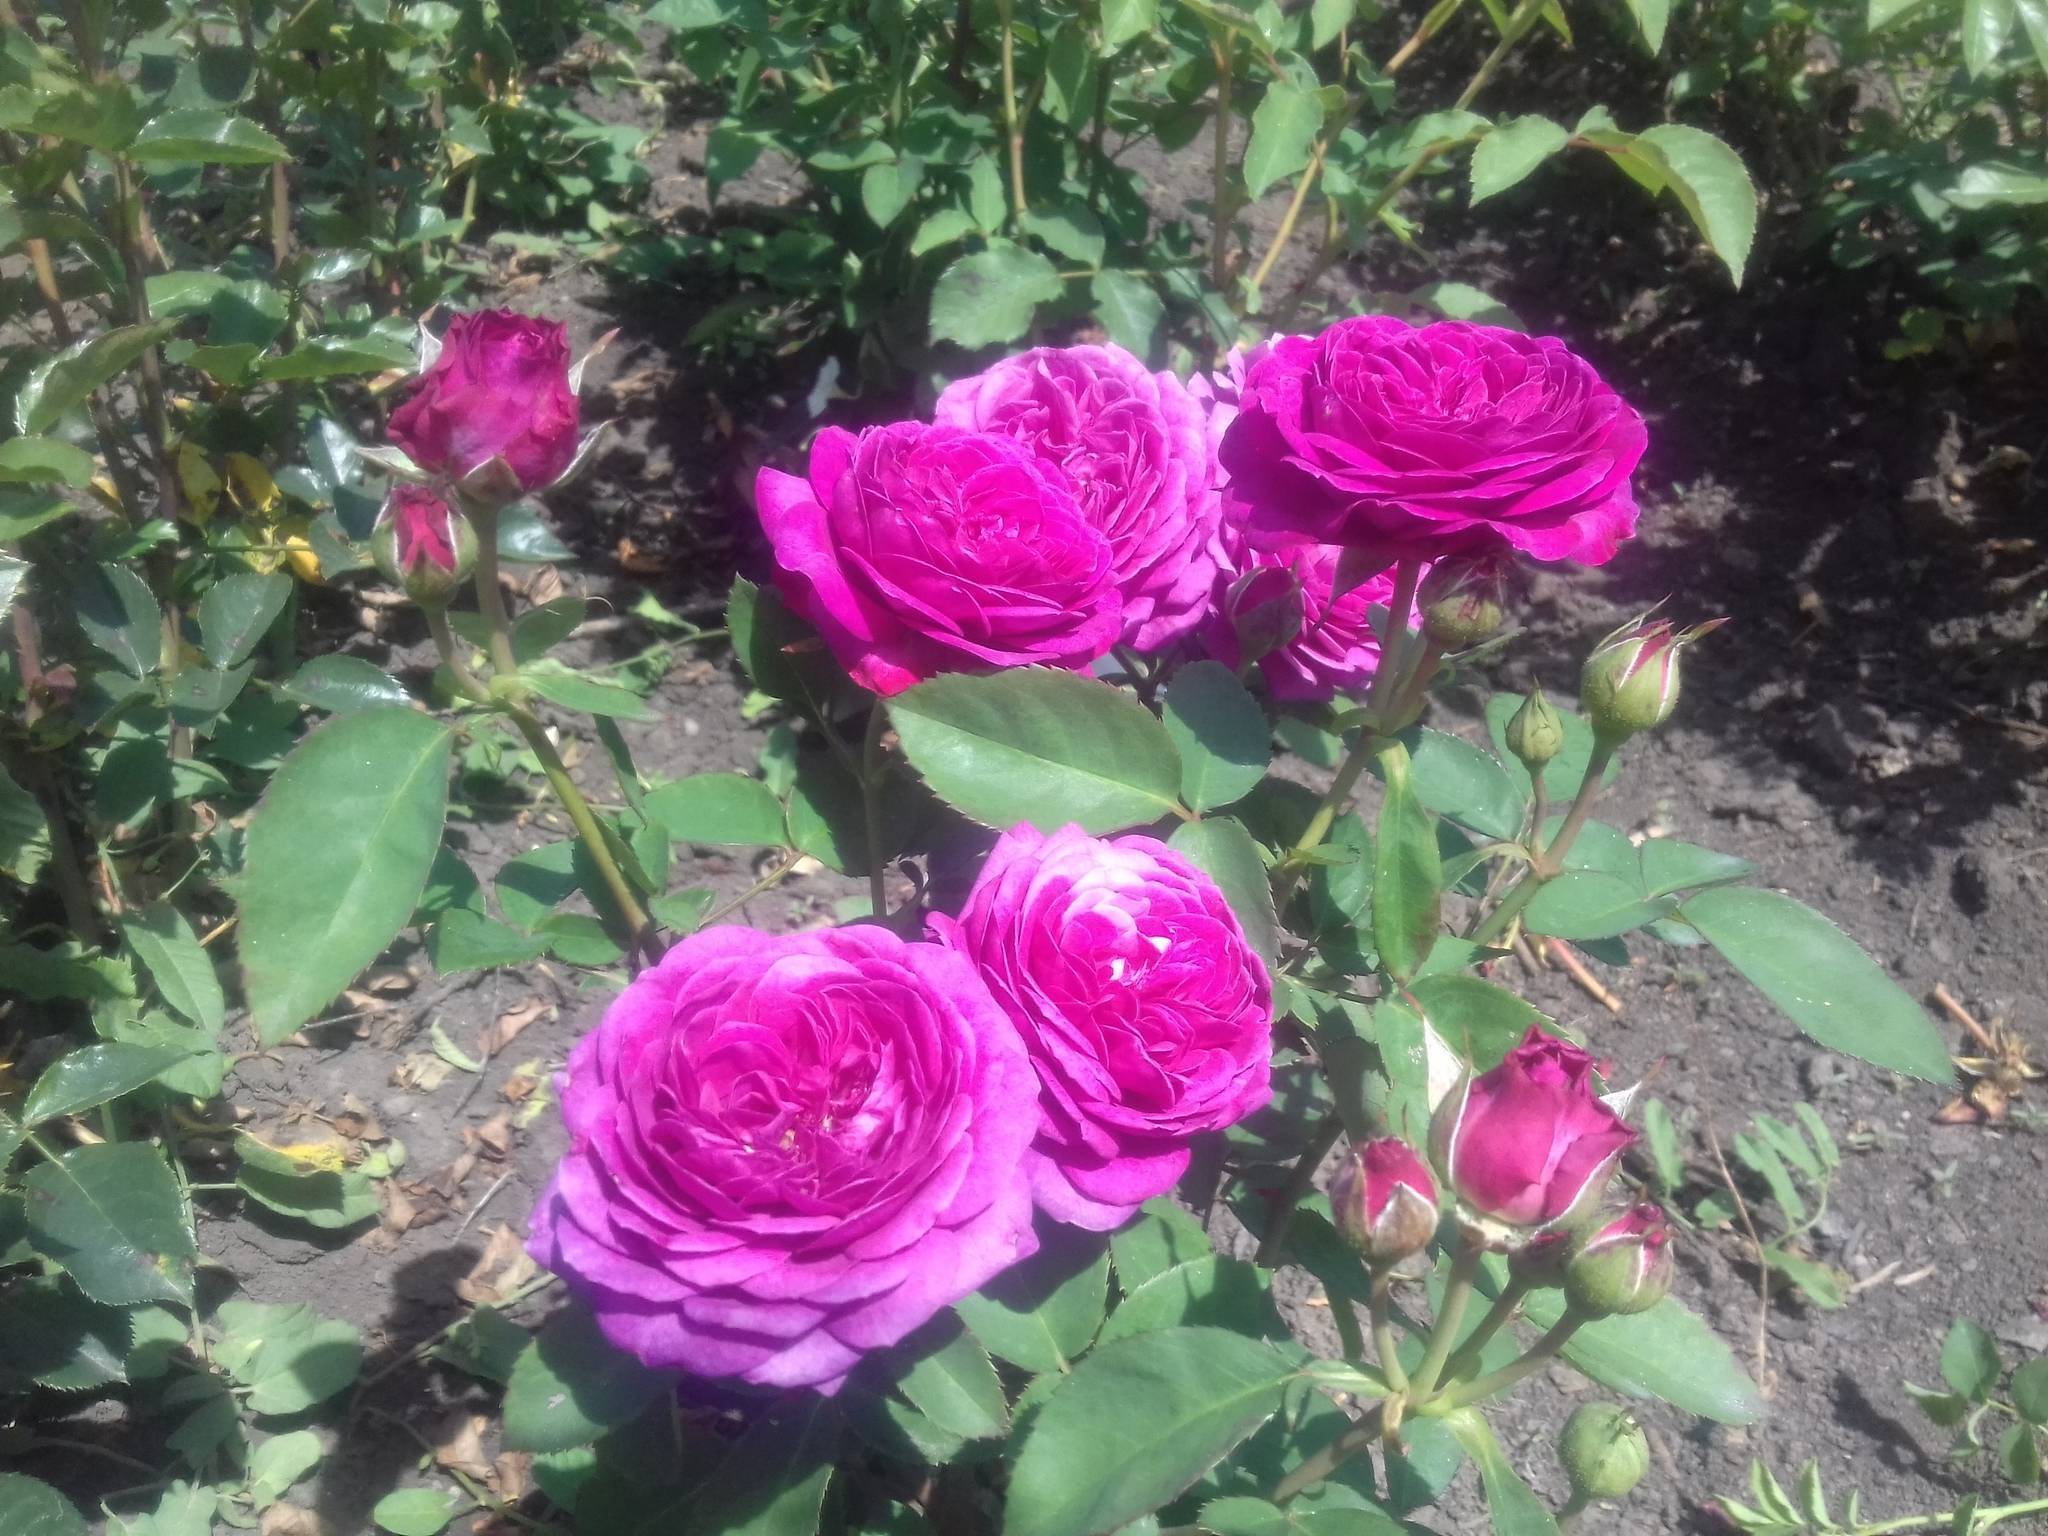 Роза хайди клум — описание, правила выращивания, посадки и ухода